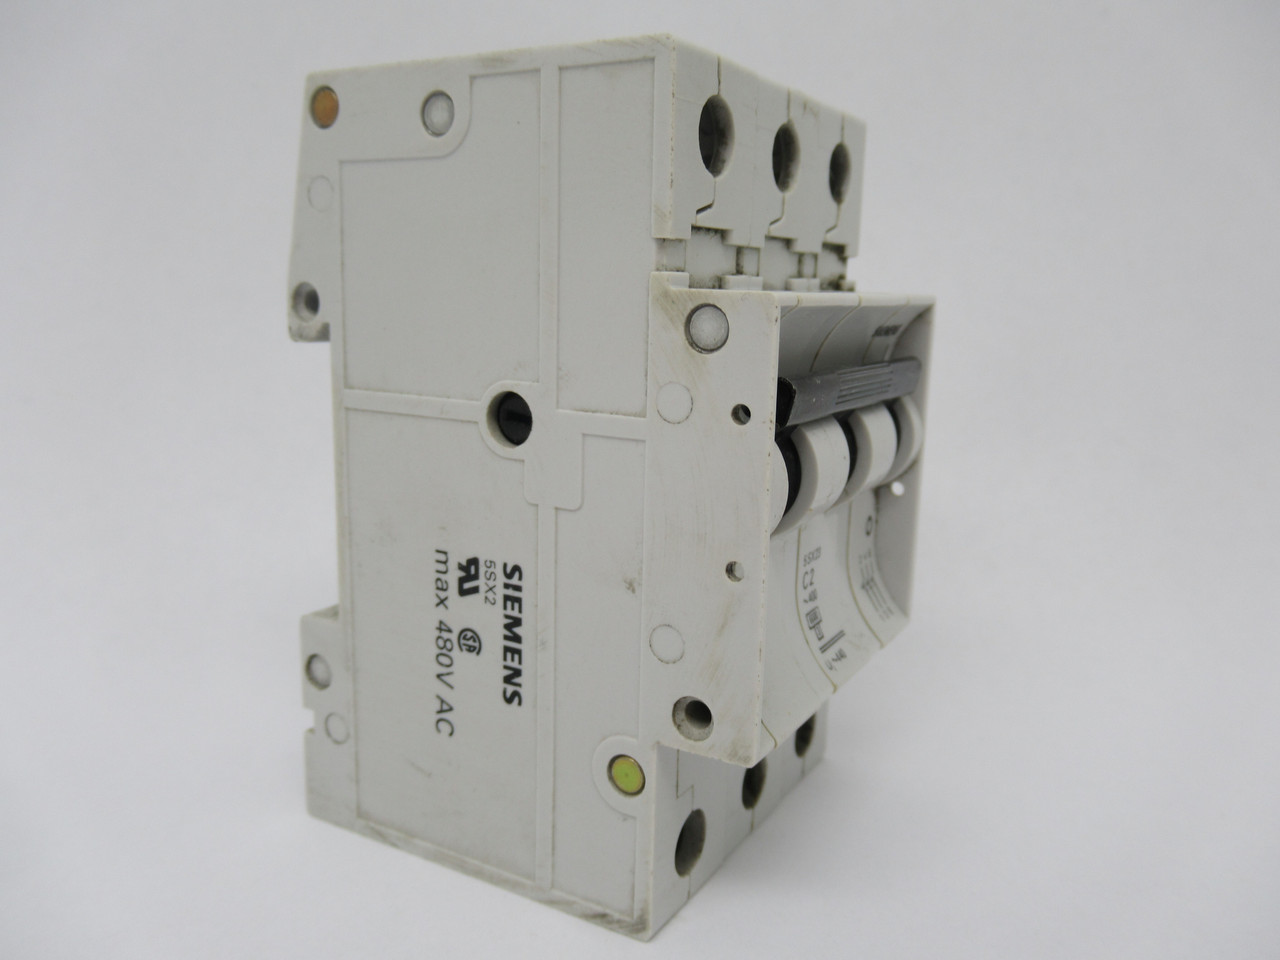 Siemens 5SX2302-7 Circuit Breaker 3 Pole 480VAC USED